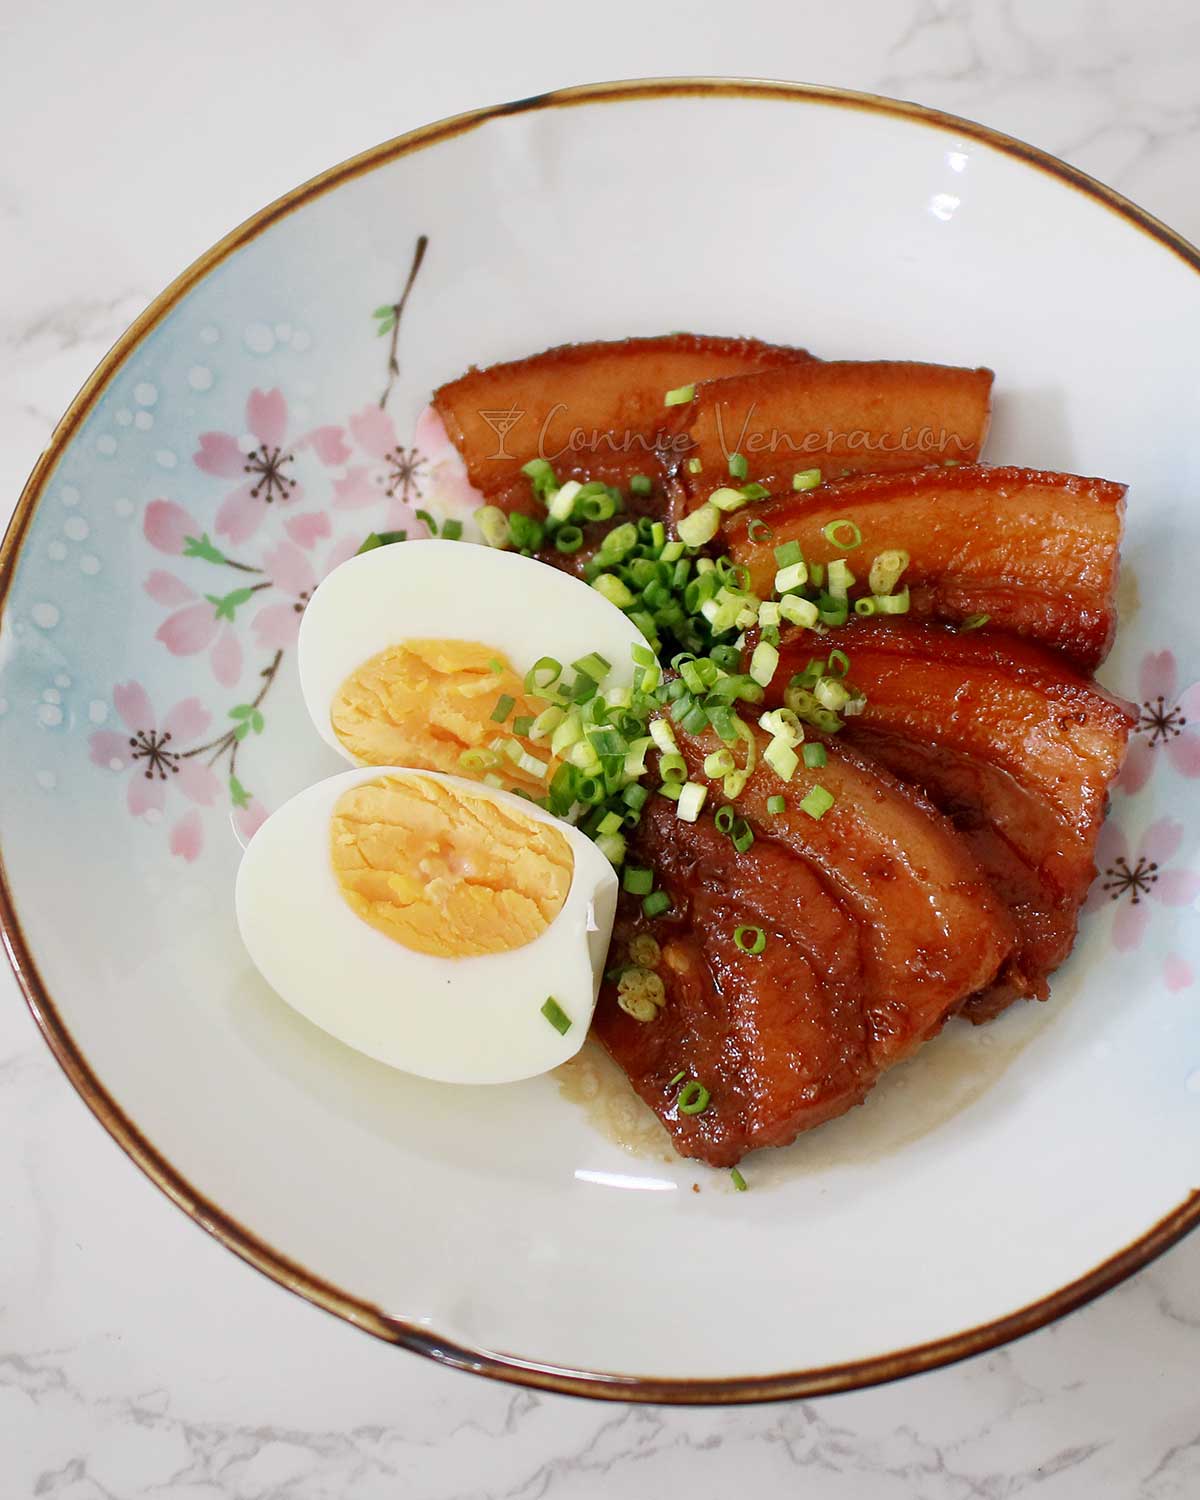 Japanese braised pork belly (buta no kakuni) and halved hard boiled egg garnished with scallions